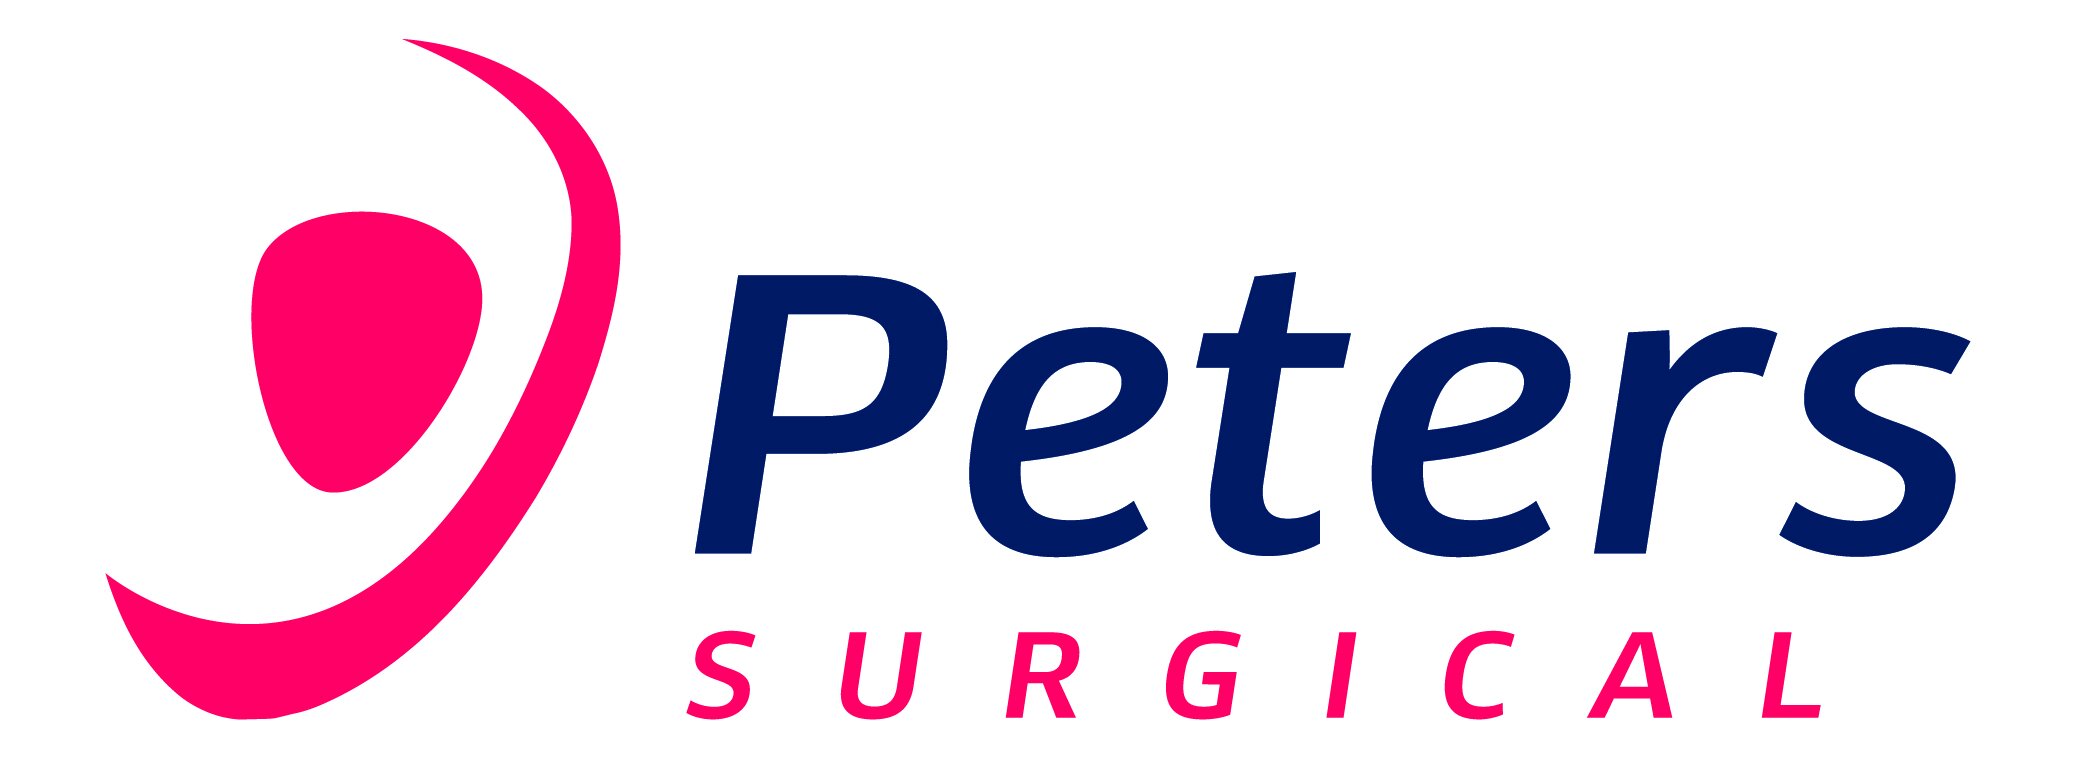 PETERS_Surgical_LOGO_CMYK.jpg